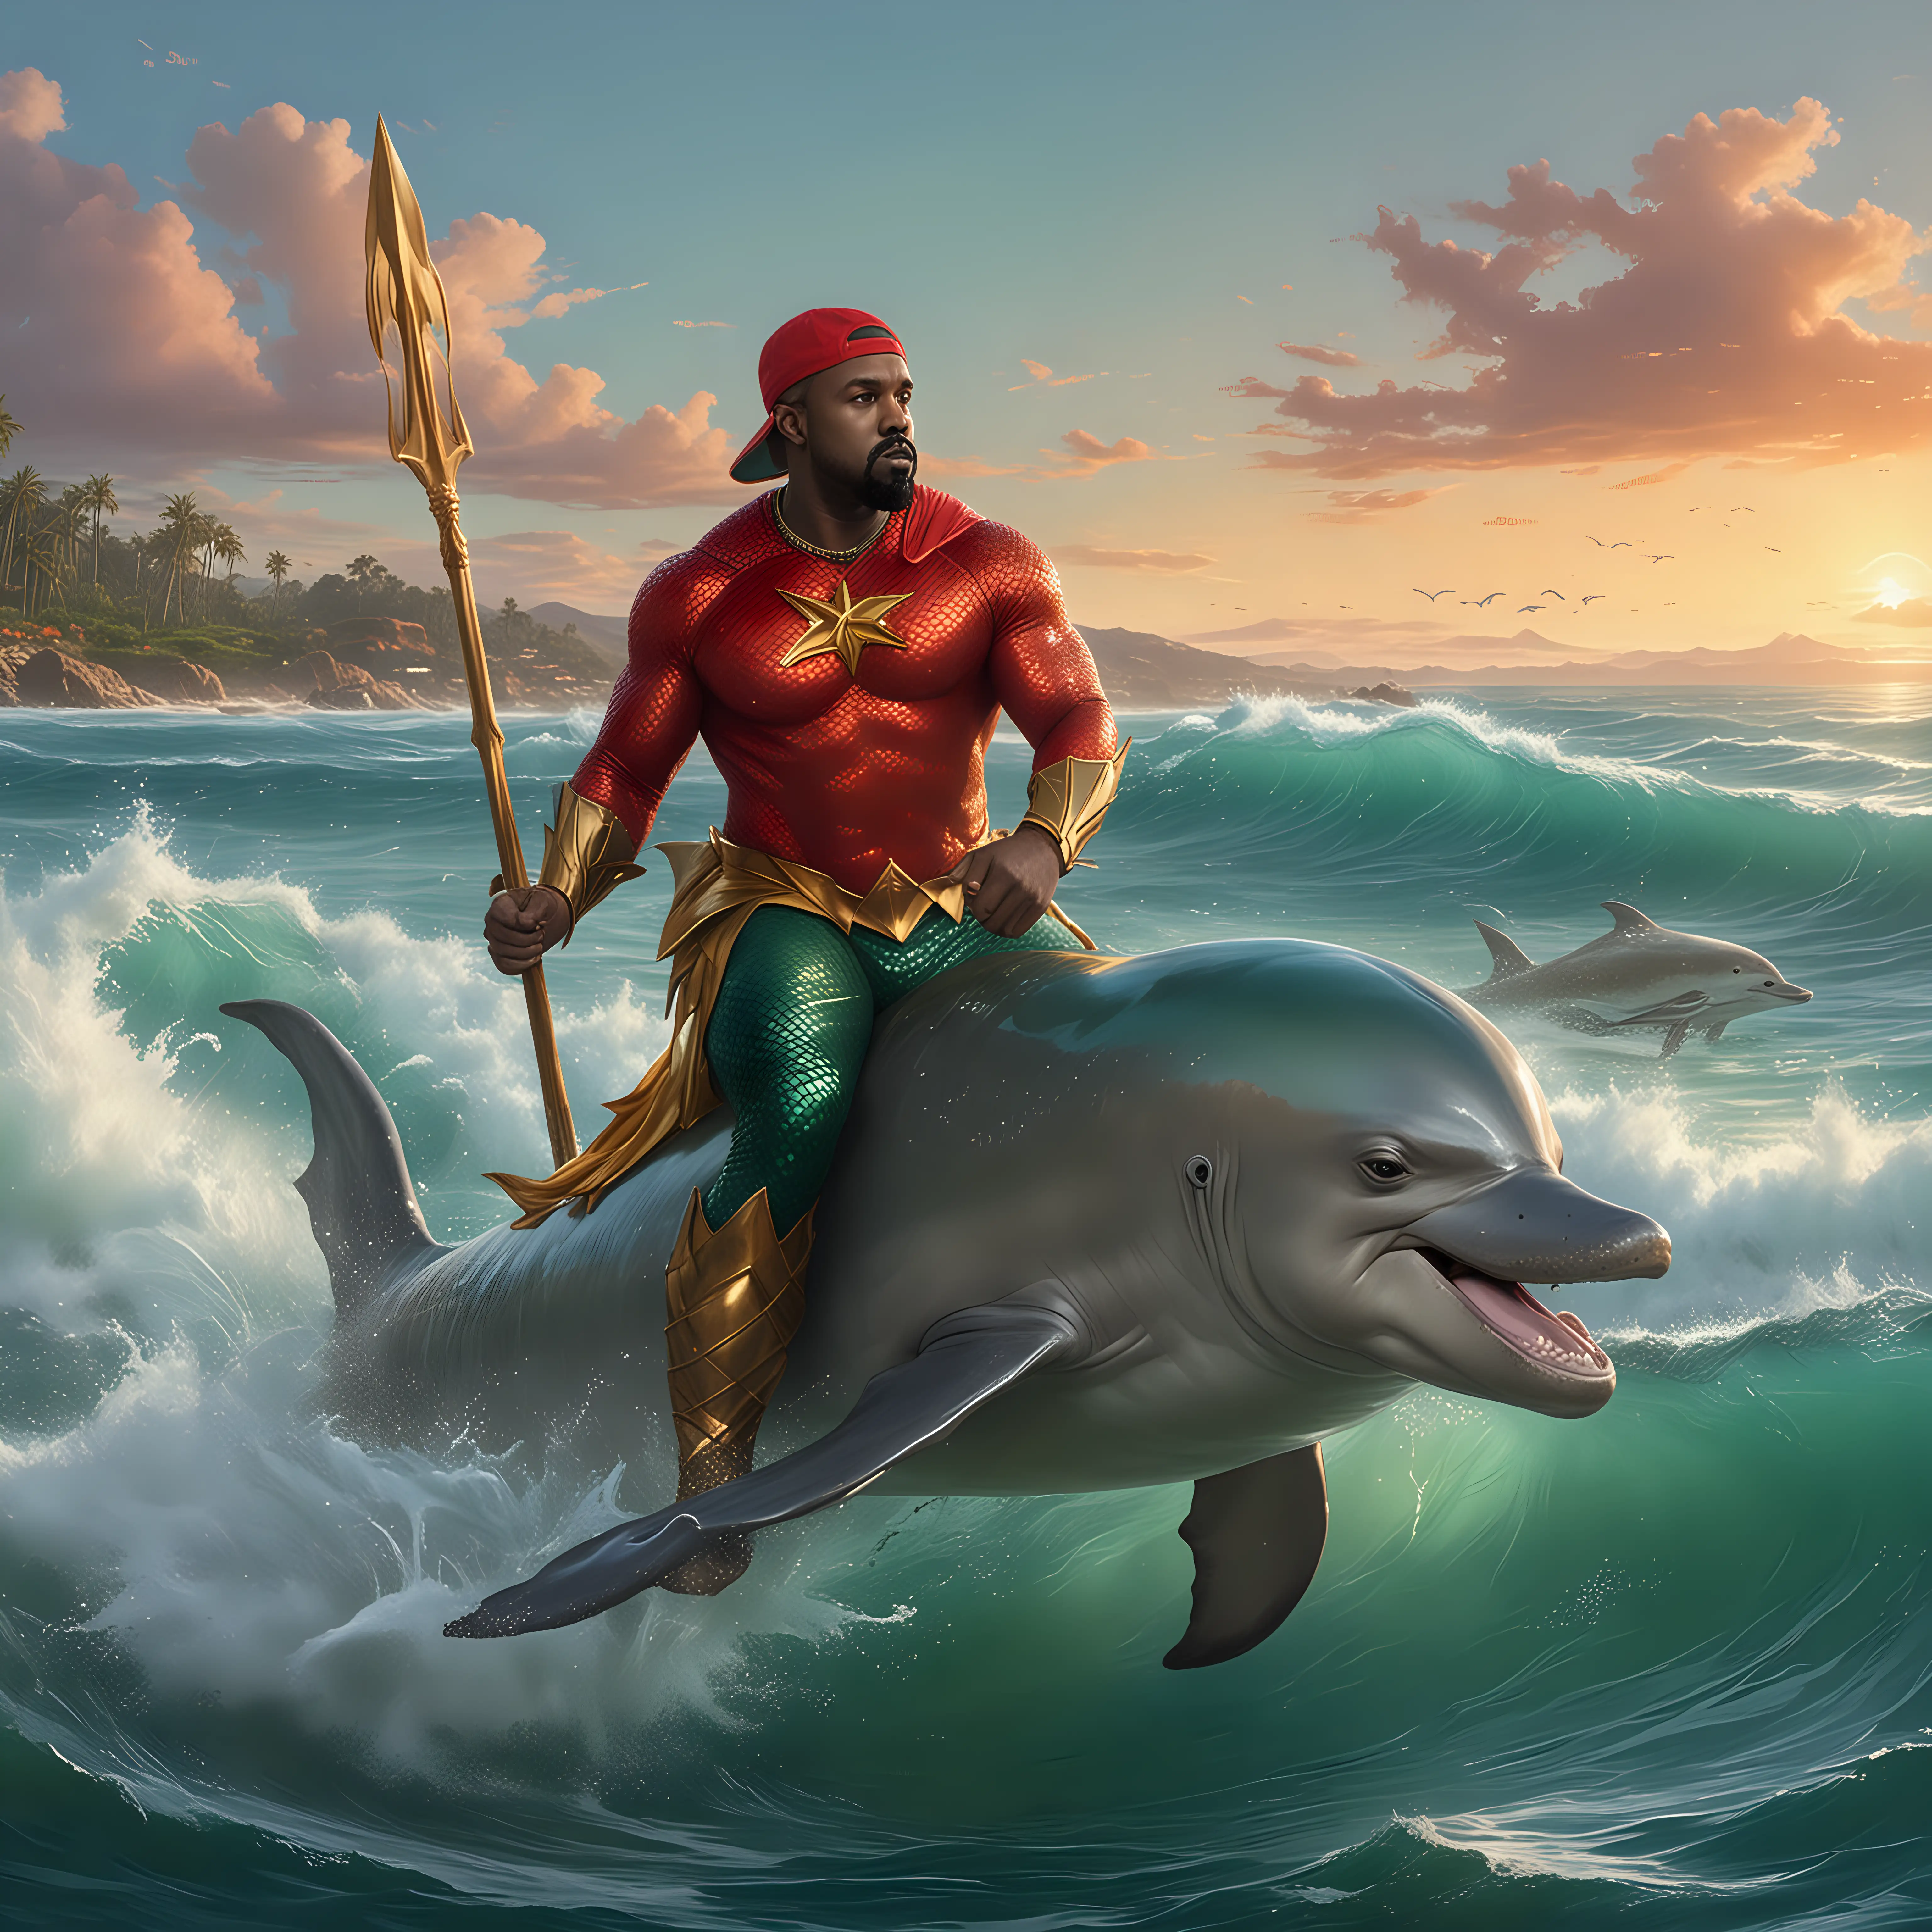 Kanye West Aquaman Portrait Celebrity Rides Dolphin in Ocean Scene